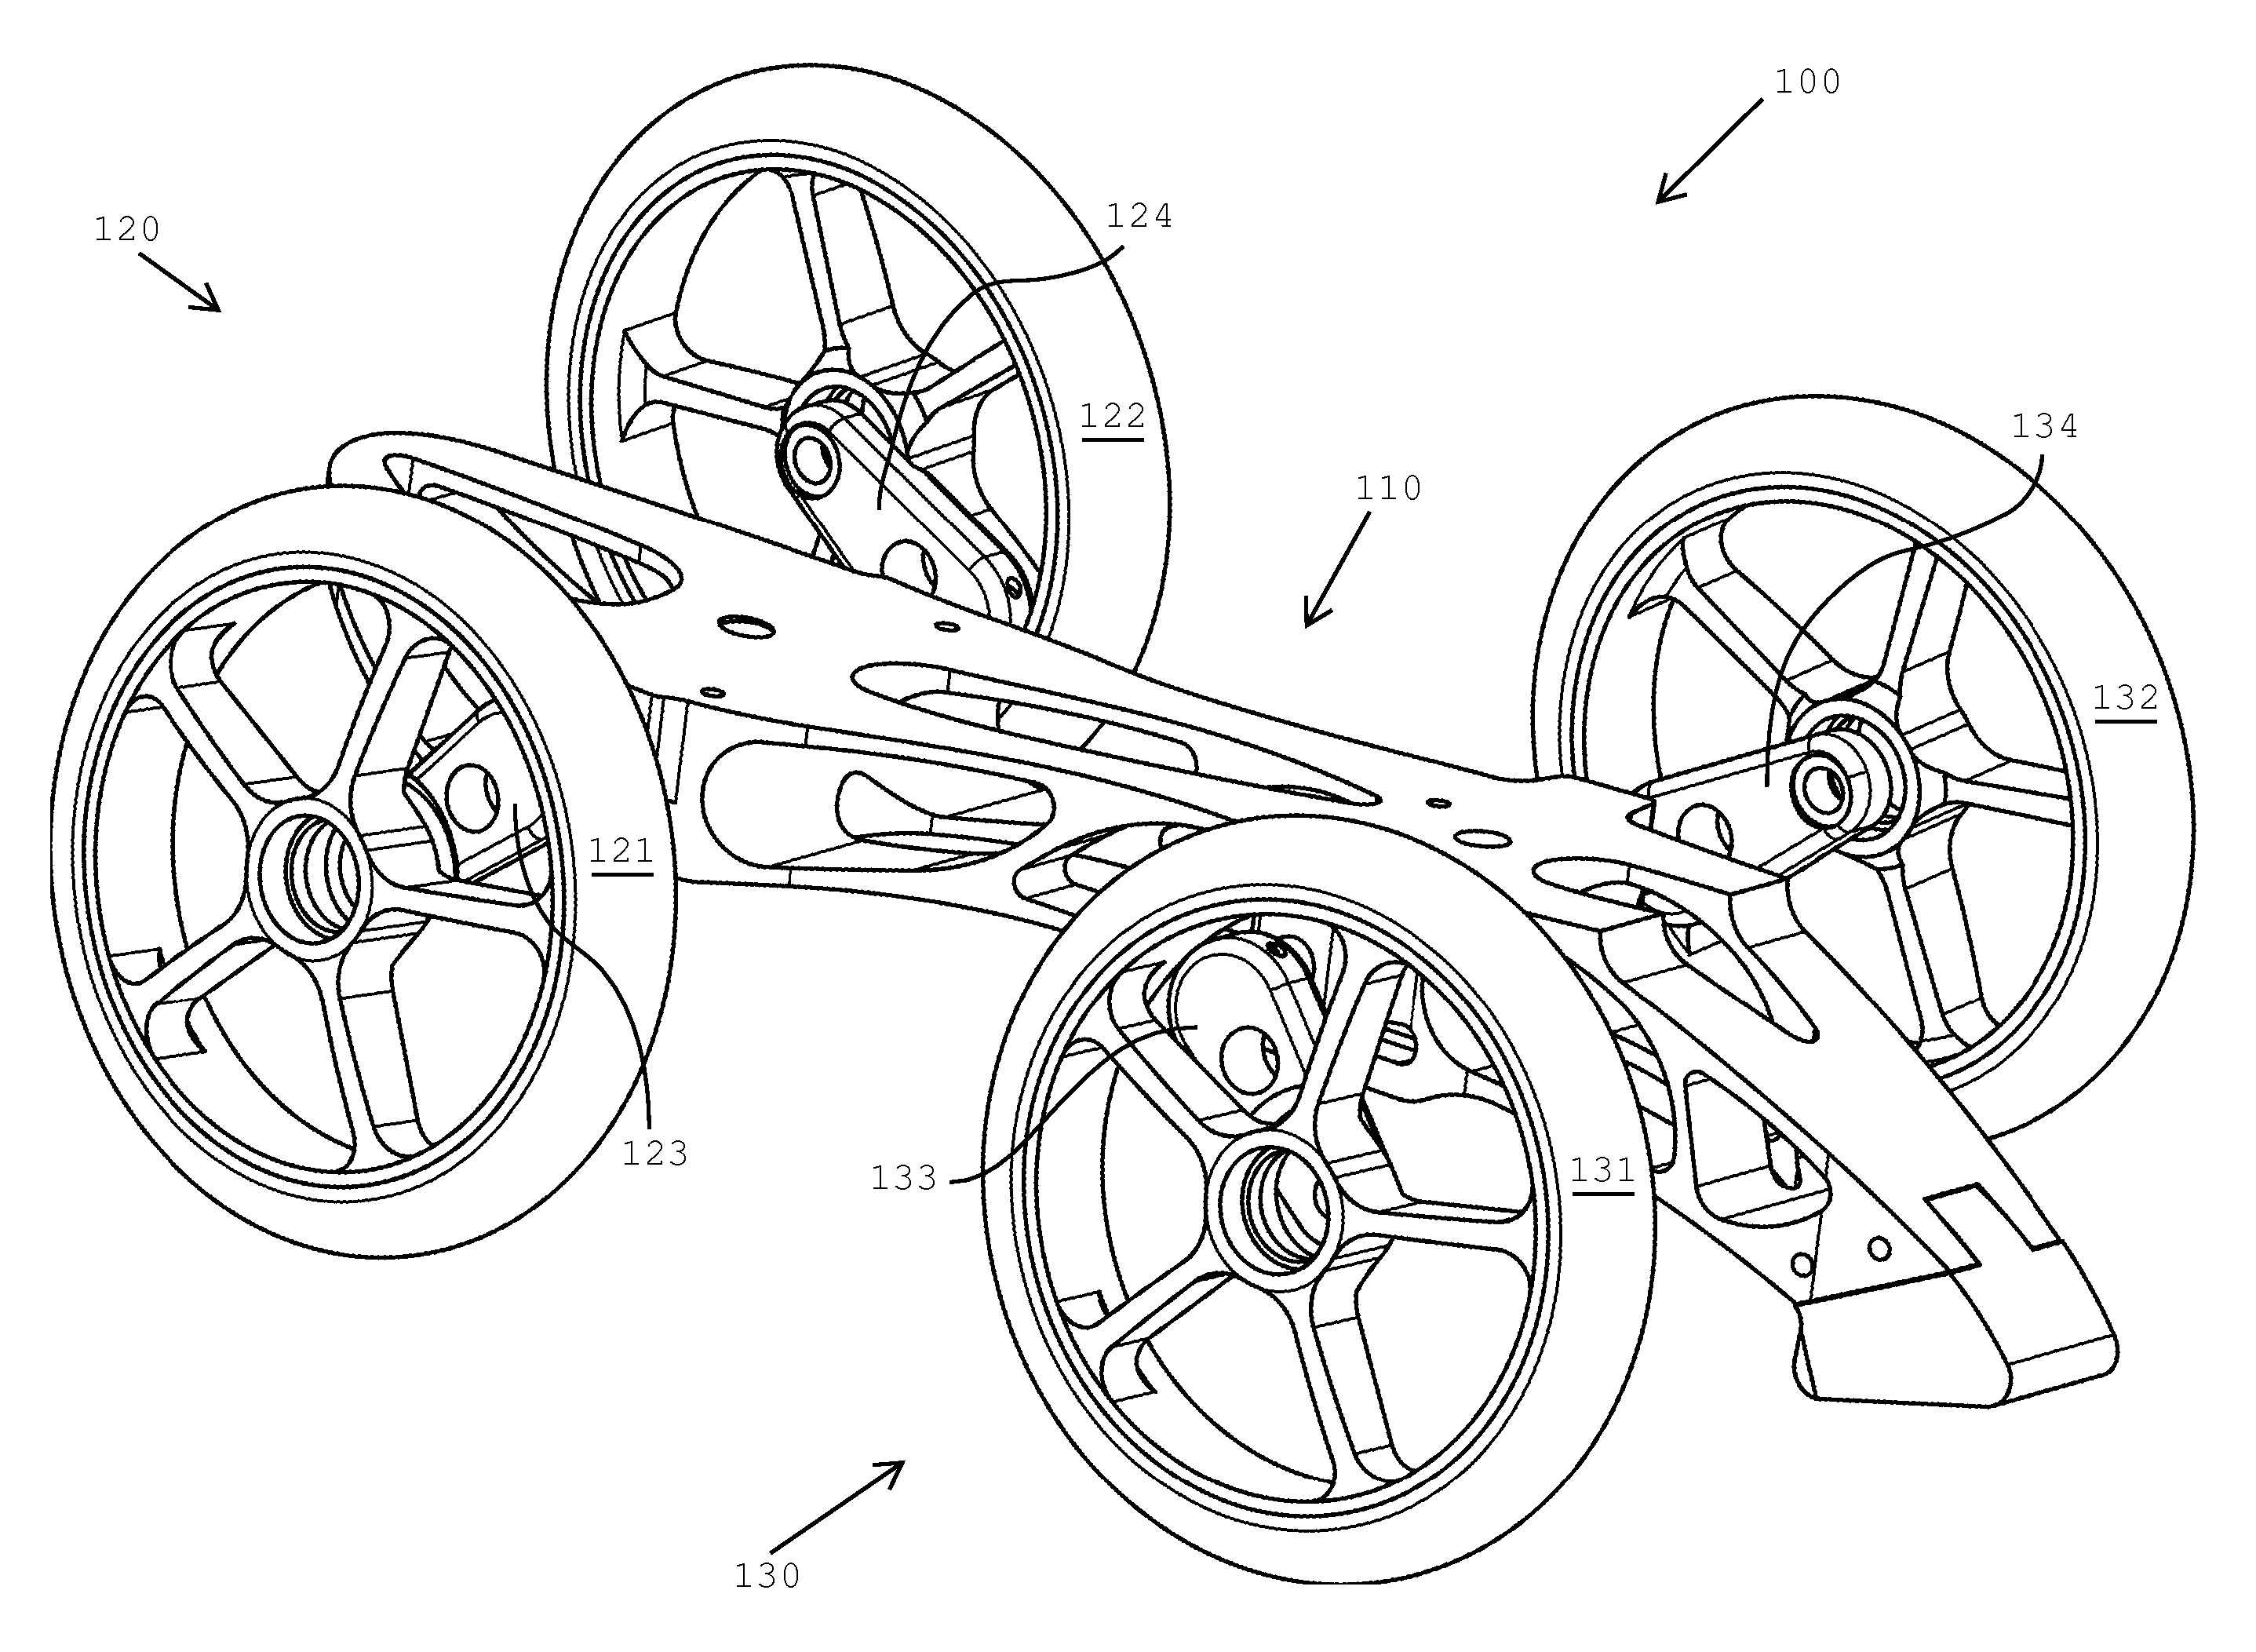 Lean-to-Turn Wheeled Device